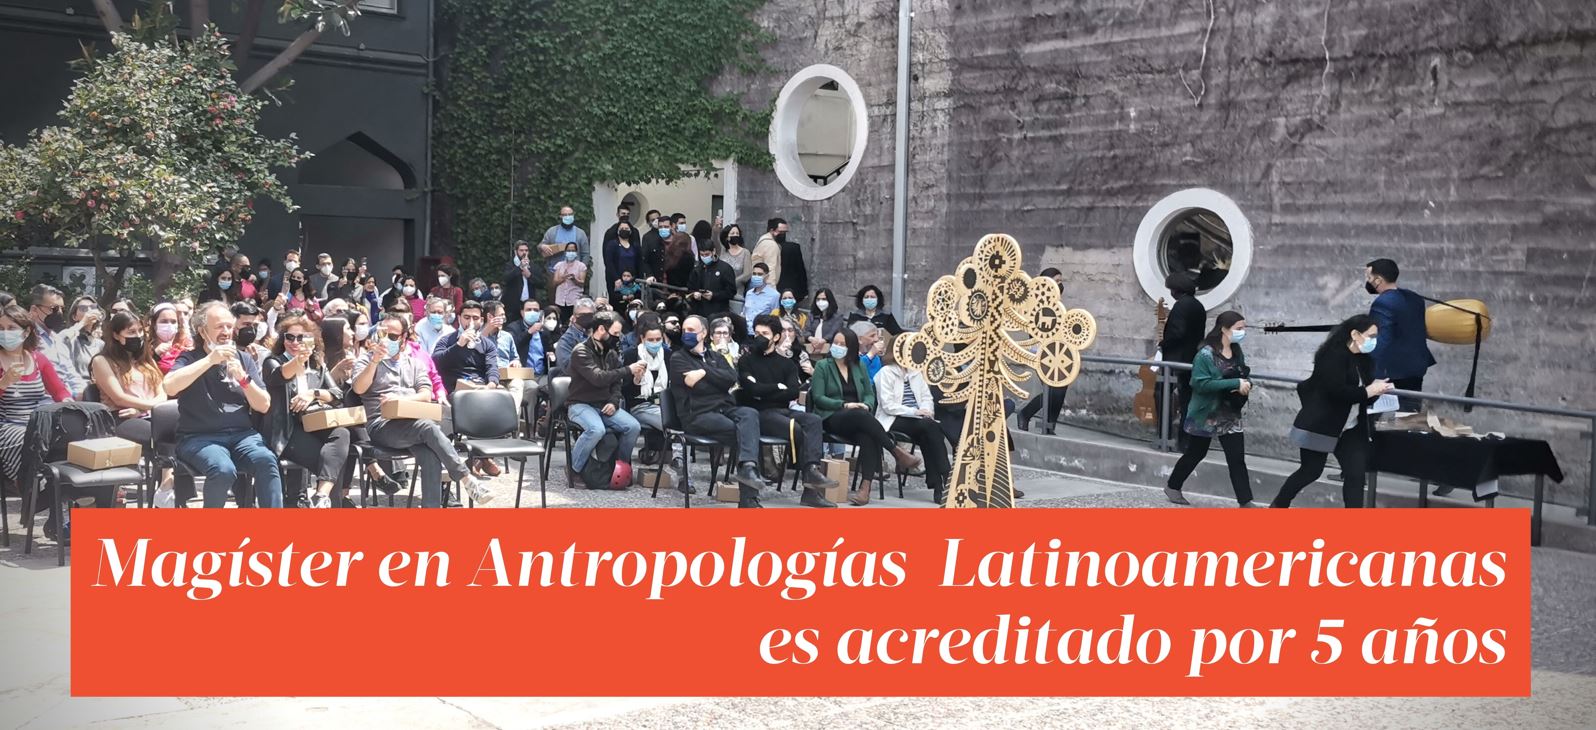 Magíster en Antropologías Latinoamericanas recibe acreditación de 5 años